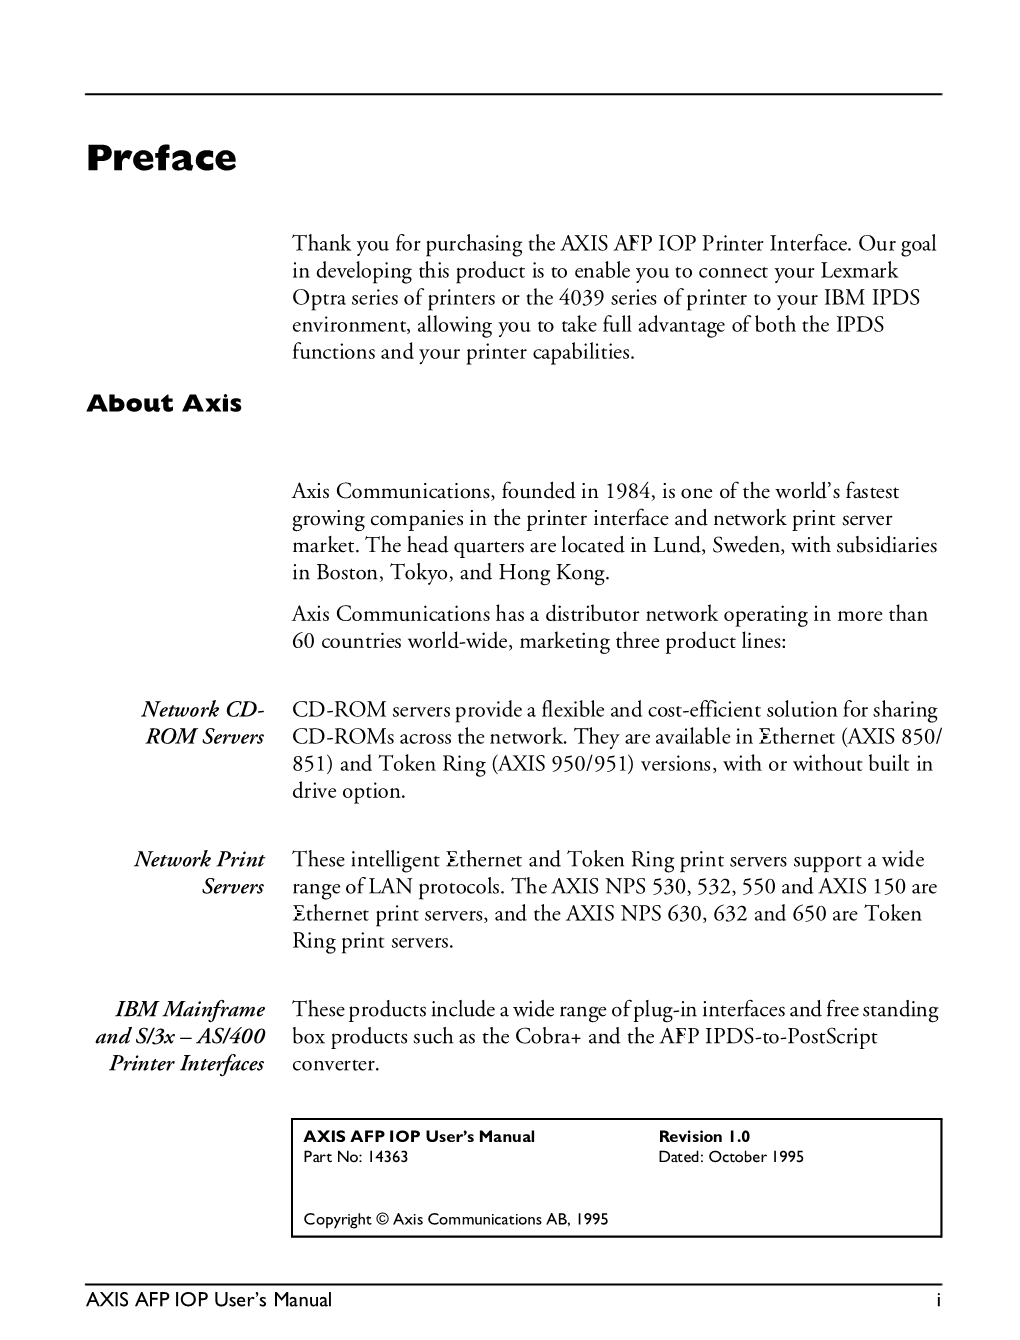 AXIS AFP IOP Printer Interface User's Manual